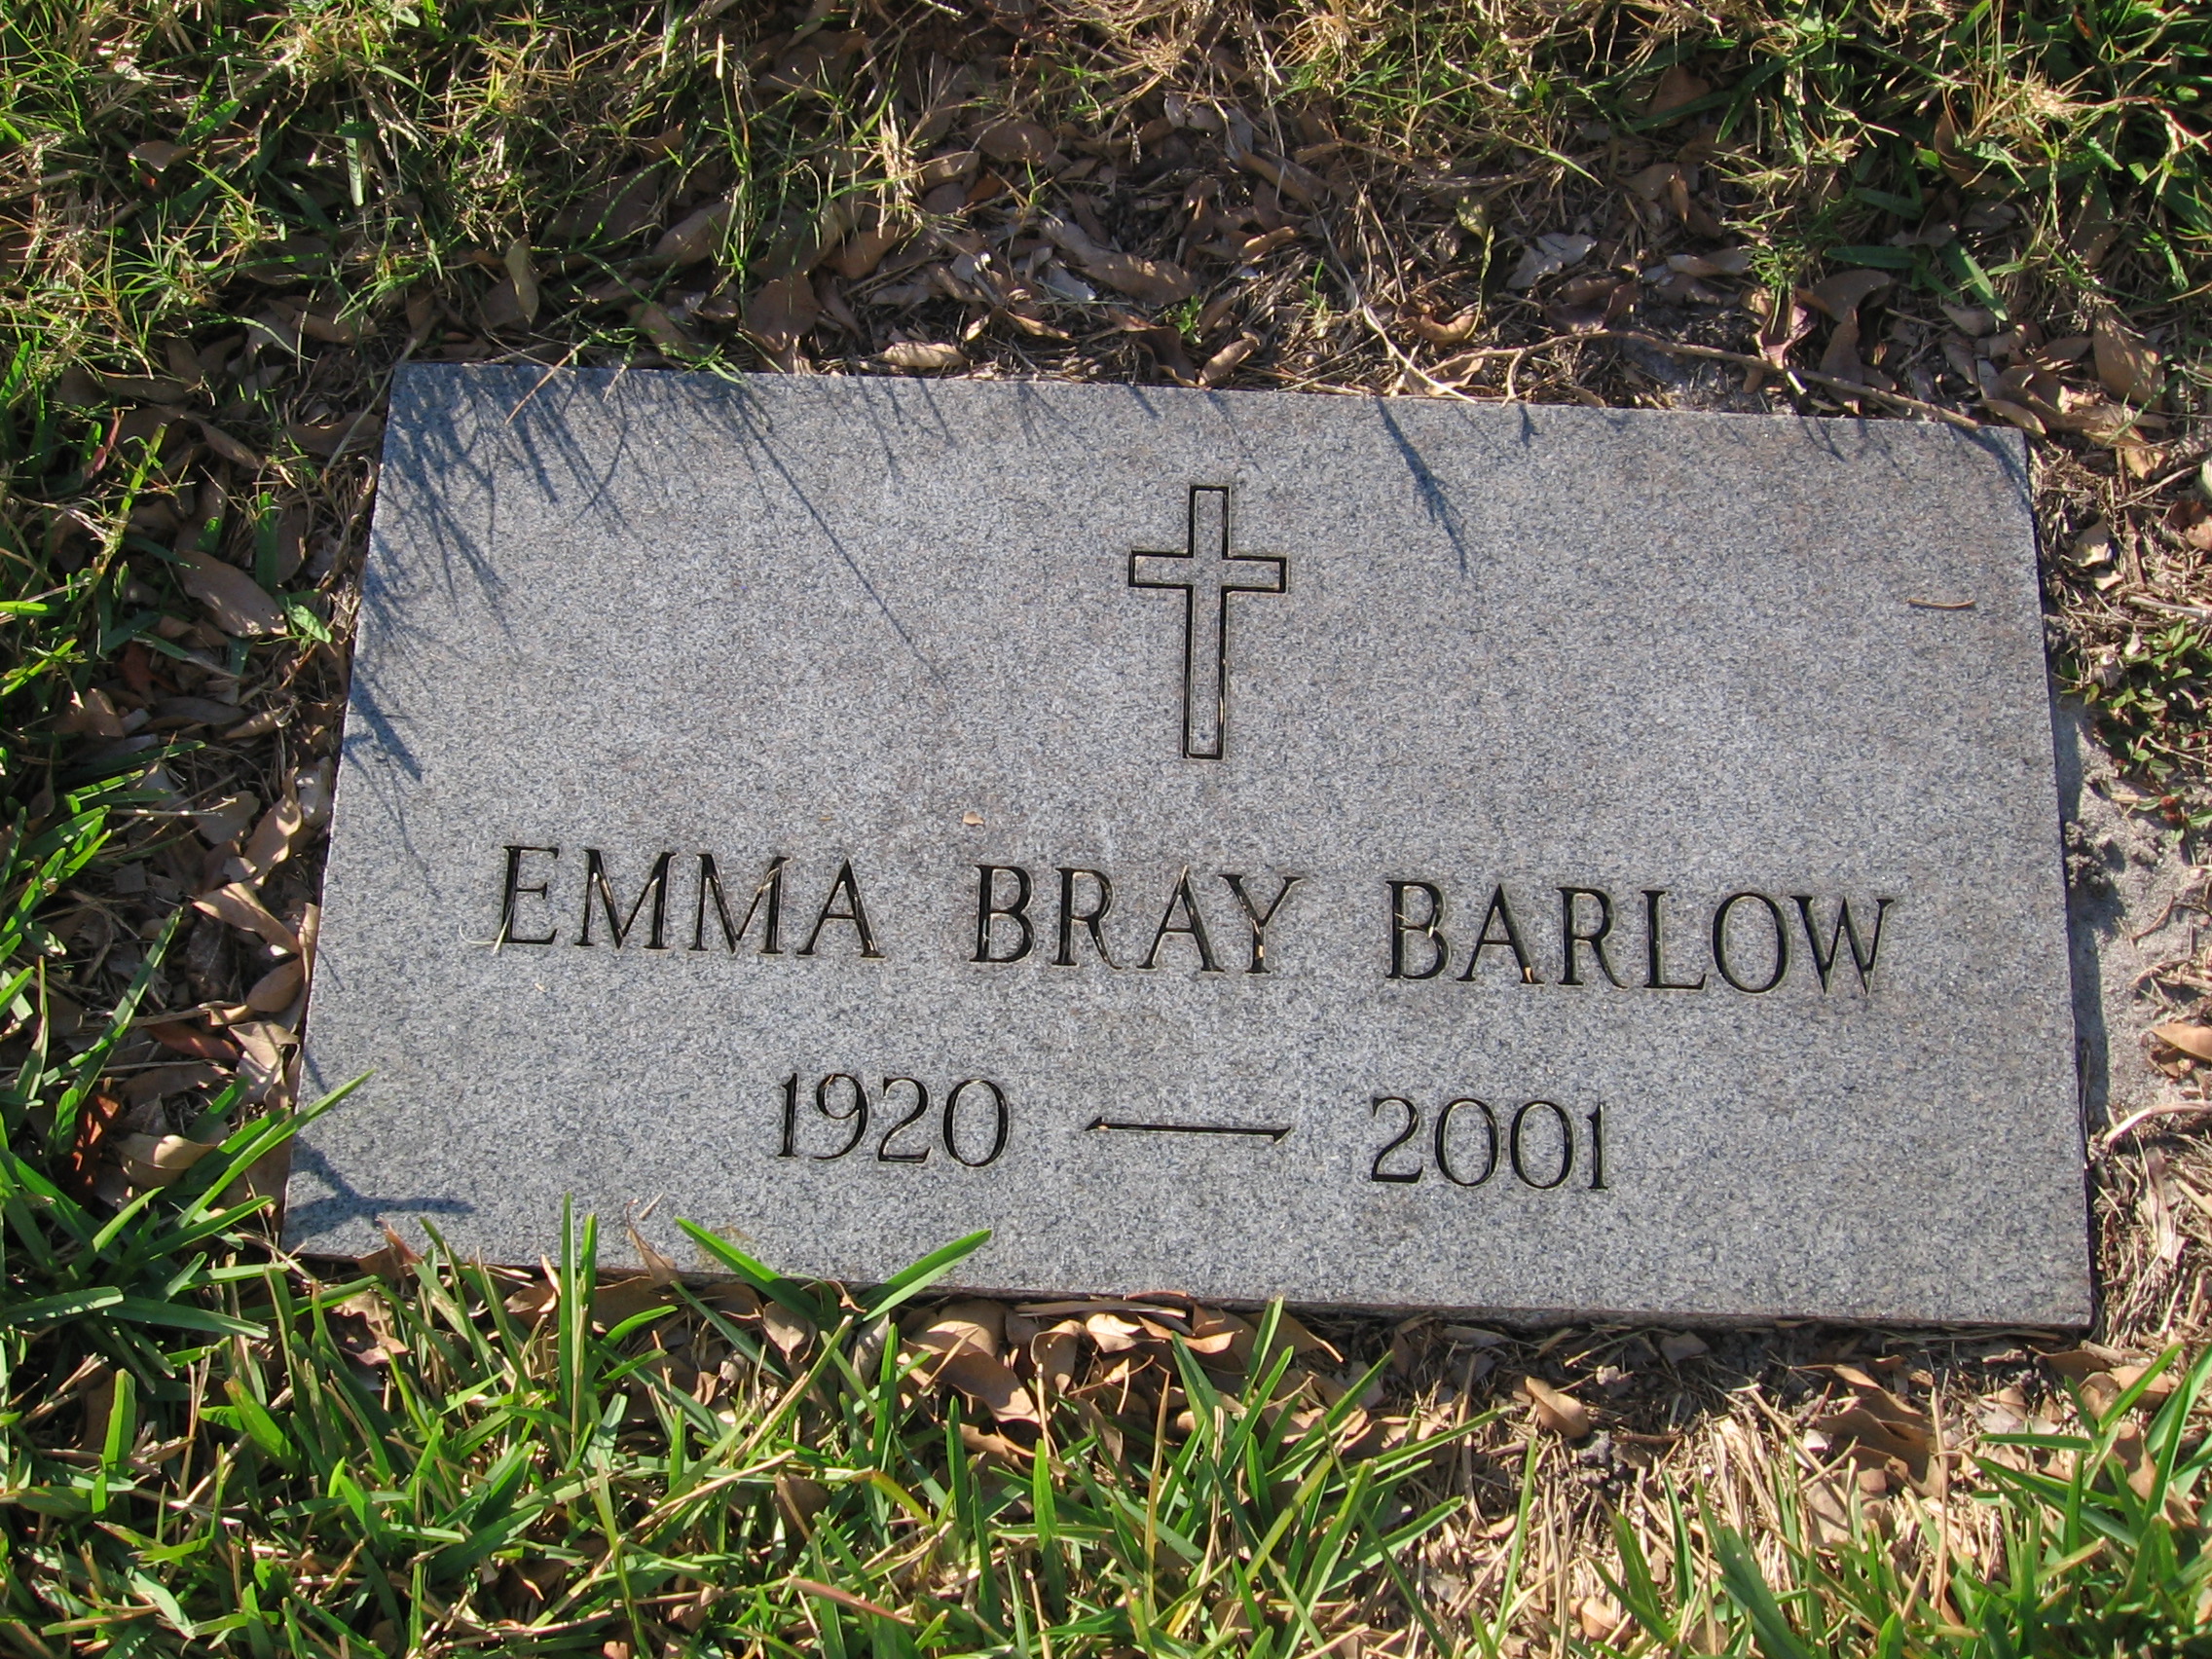 Emma Bray Barlow